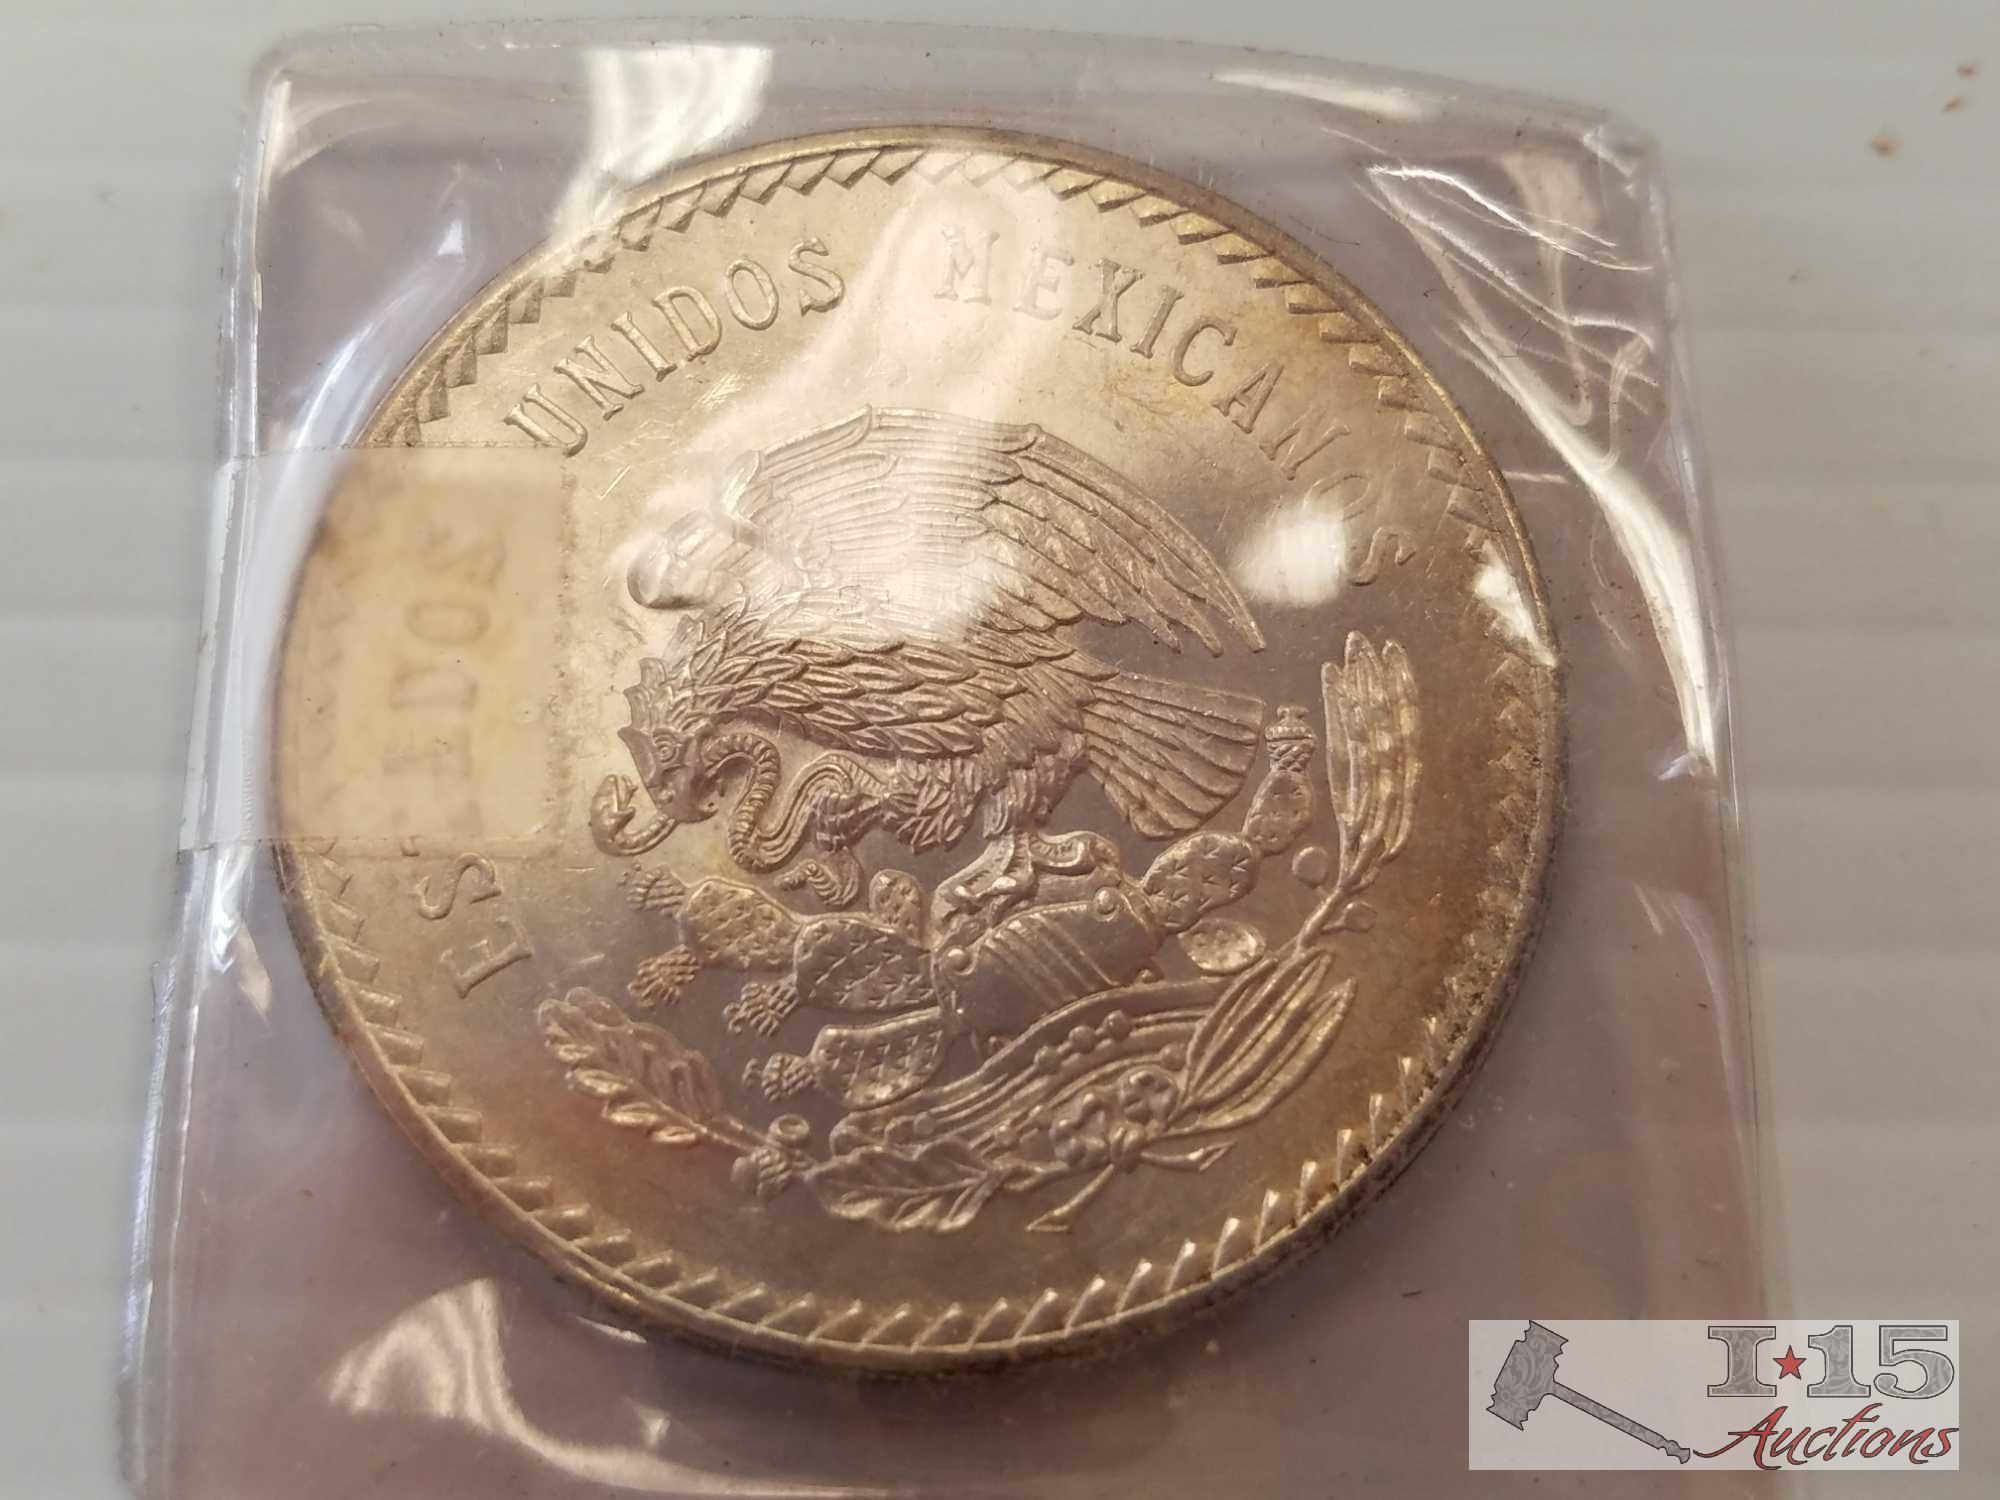 Mexican coin collection - some silver